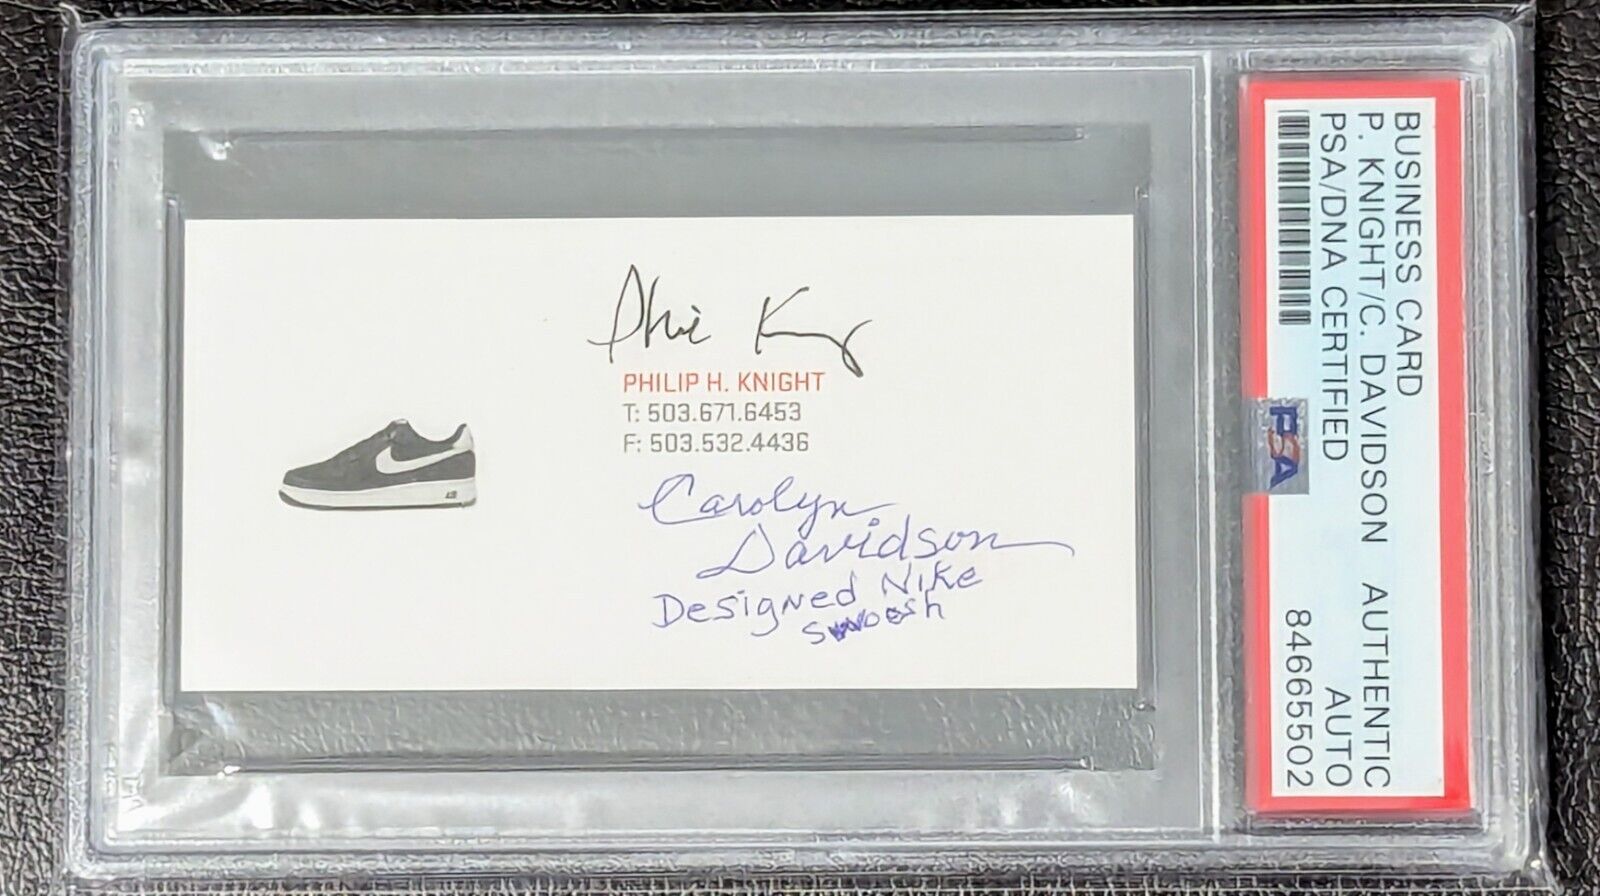 Phil Knight PSA Signed Vintage Nike Shoe Business Card Carolyn Davidson Signed